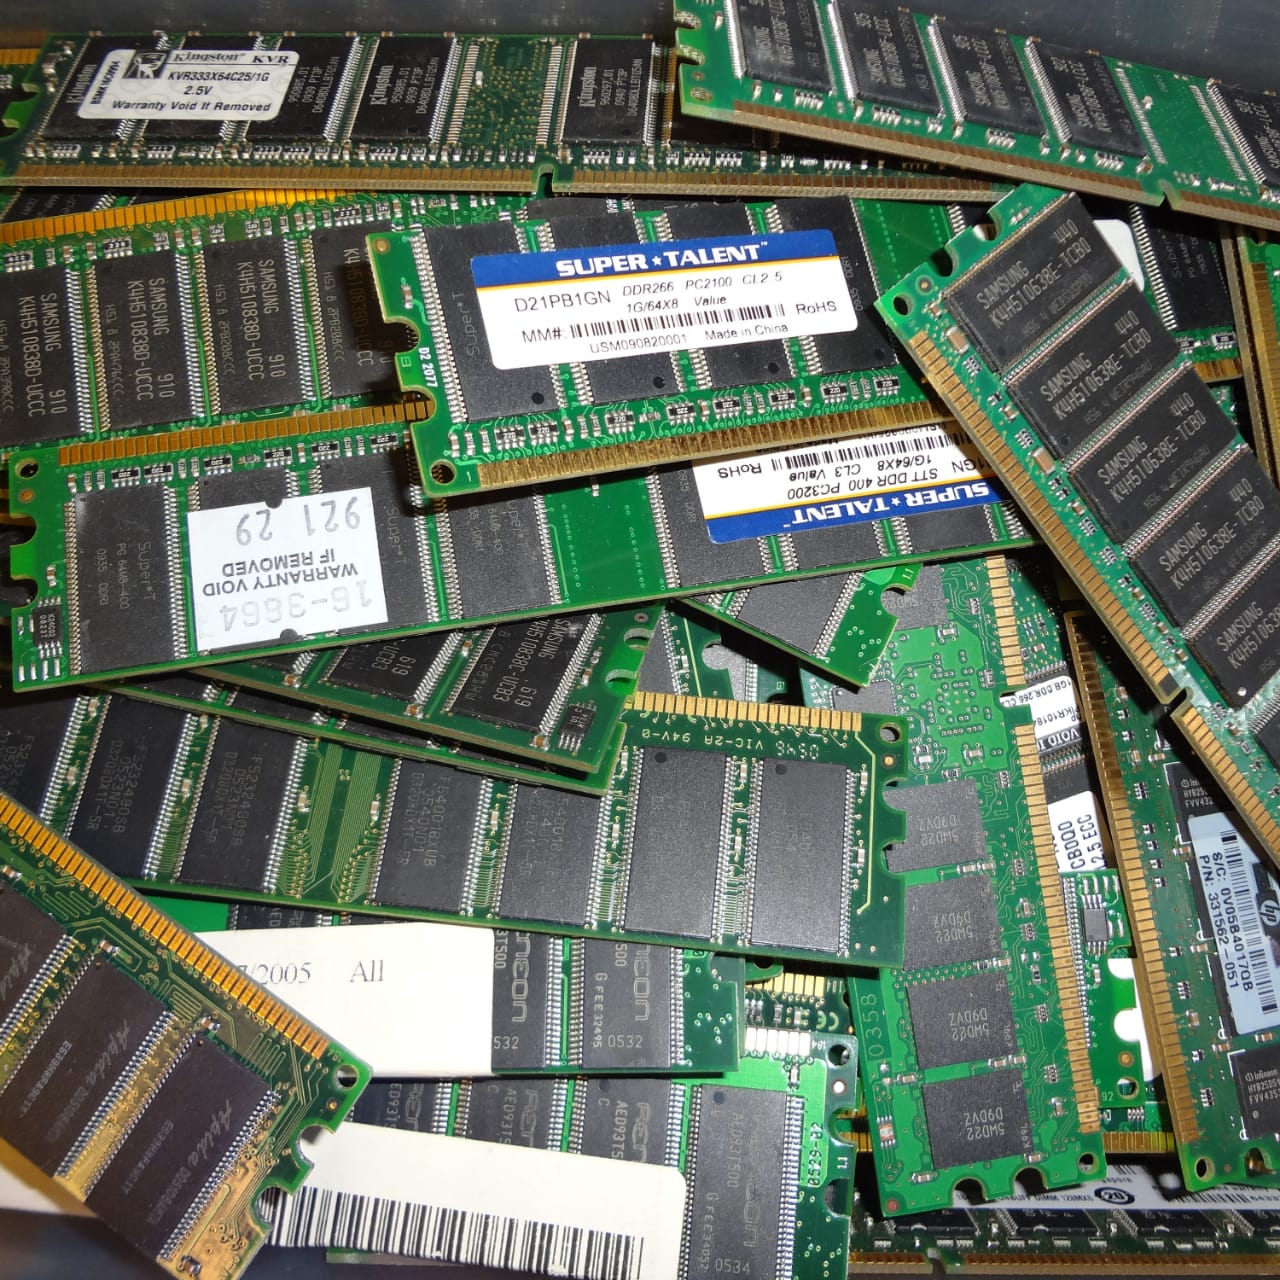 رم DDR3